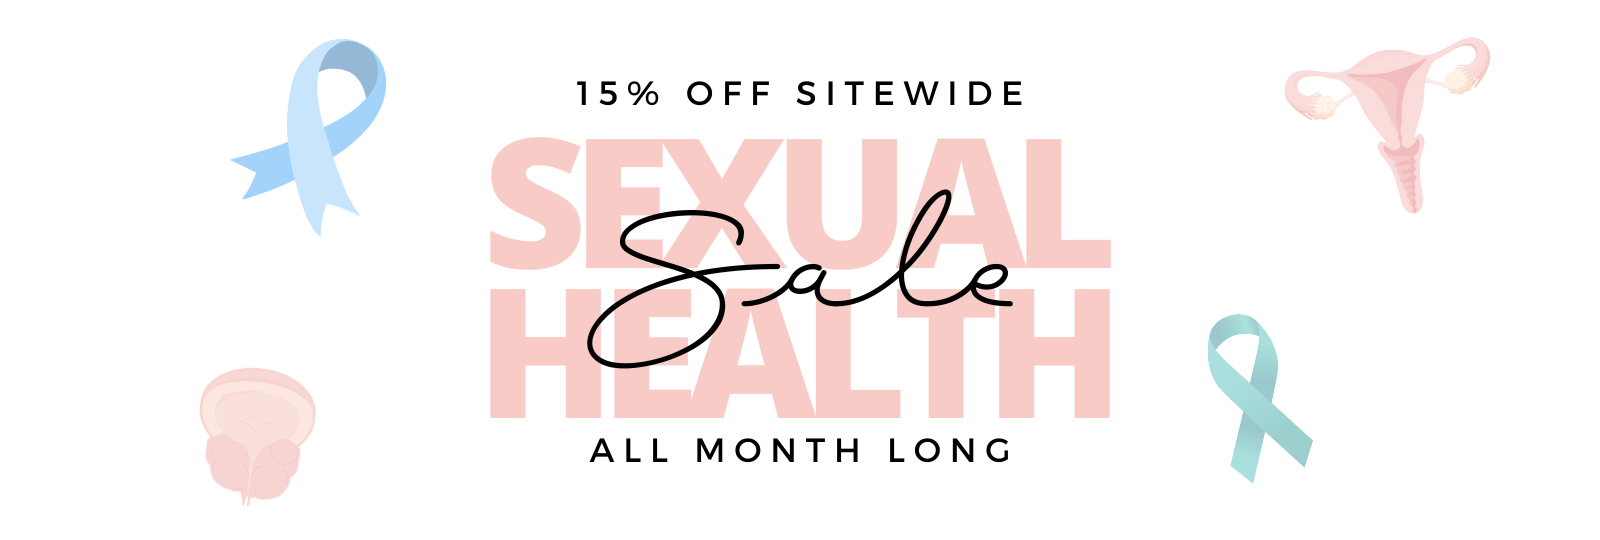 sexualhealth month sale